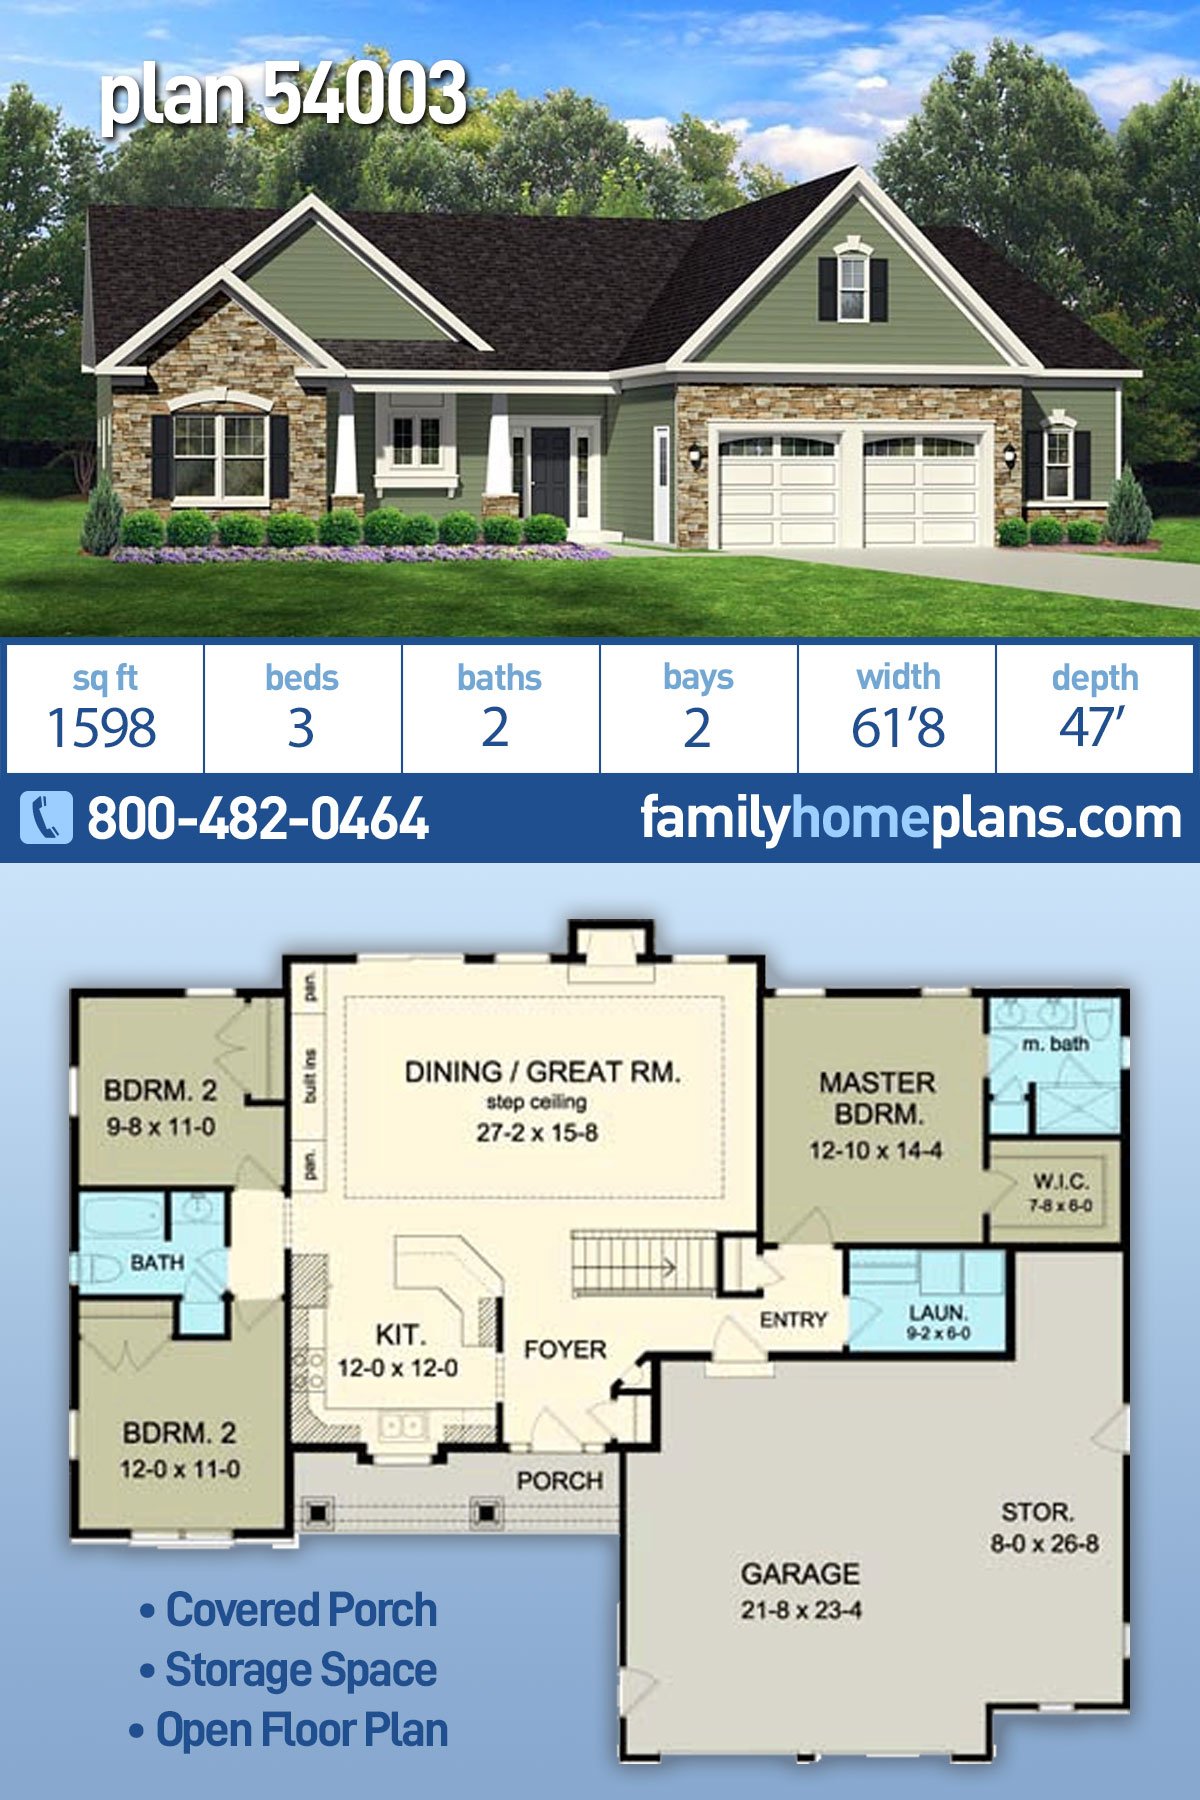 House Plan 54003